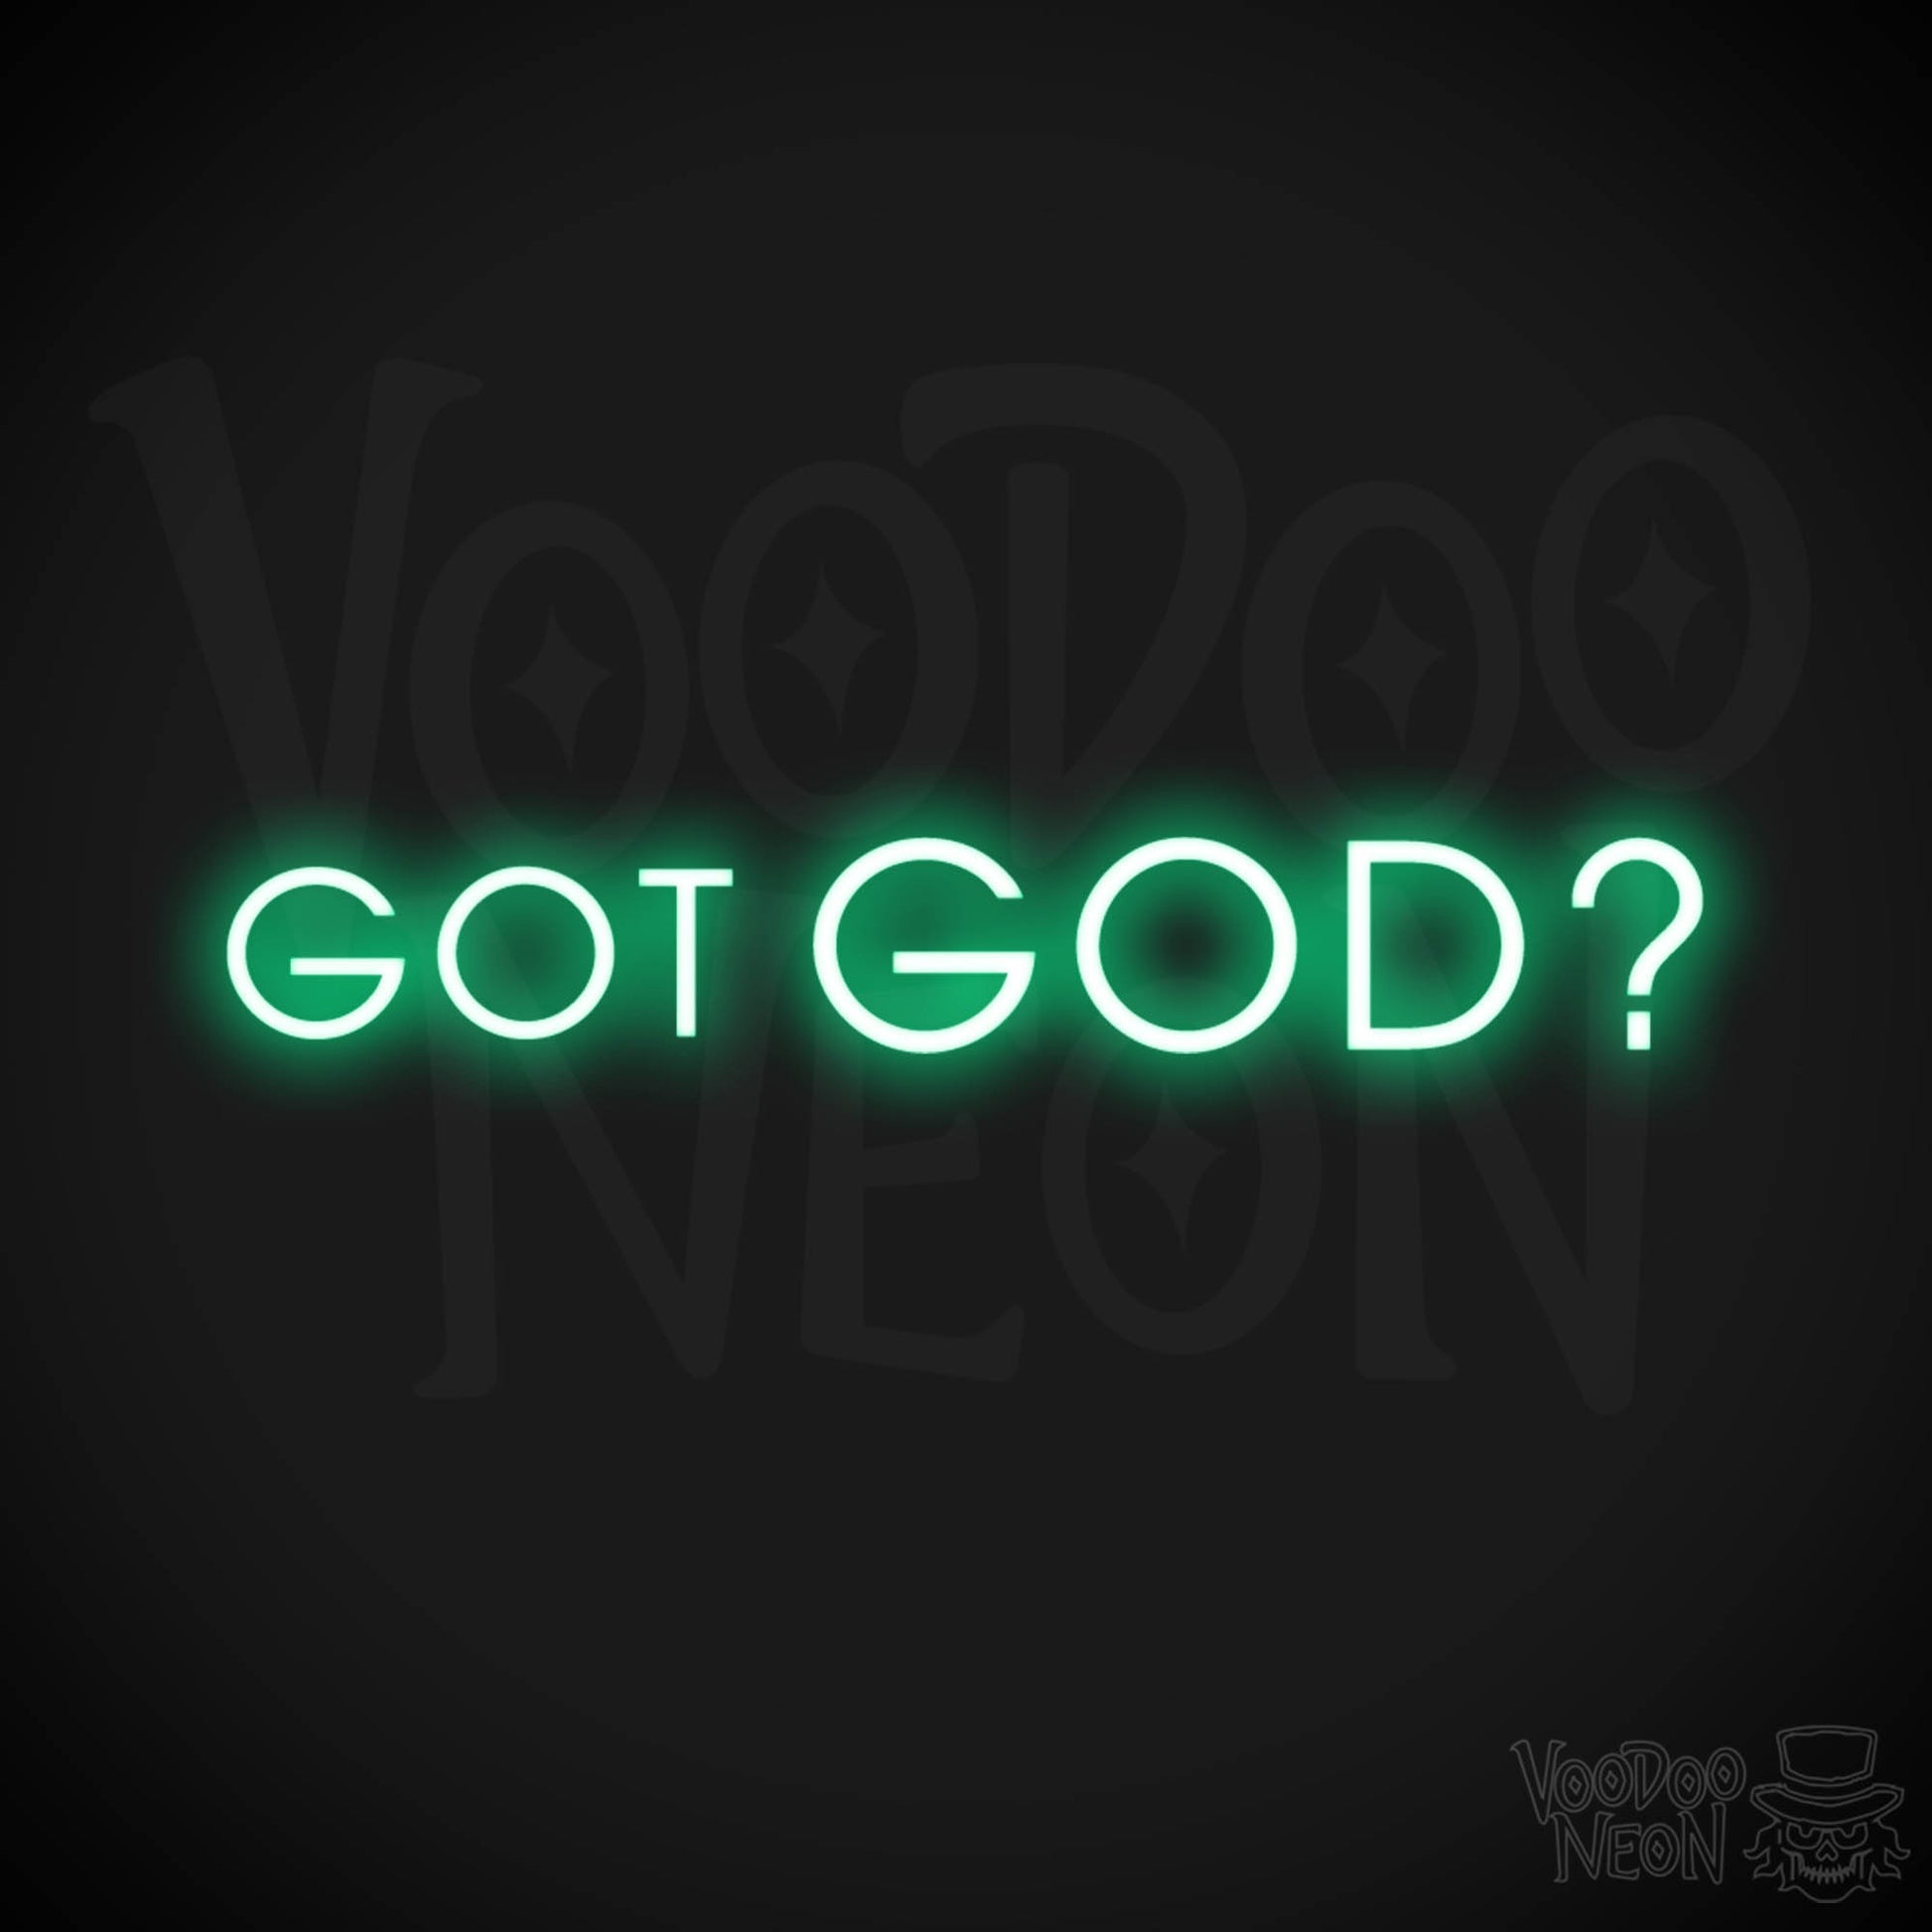 Got God Neon Sign - Neon Got God Sign - Neon God Sign - LED Wall Art - Color Green